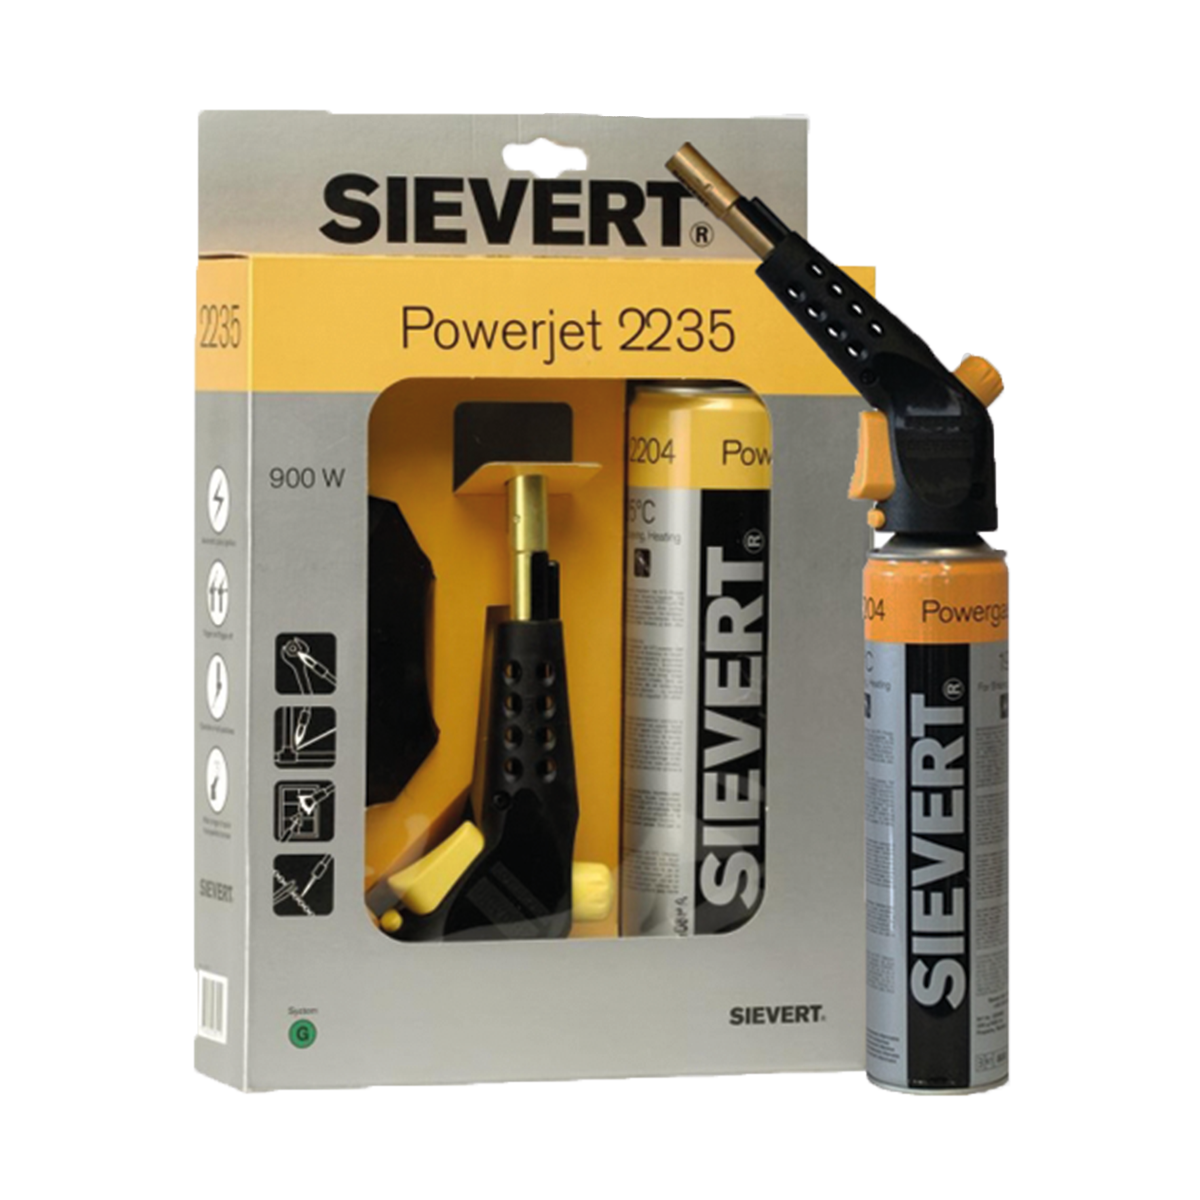 Sievert – Powerjet 2235